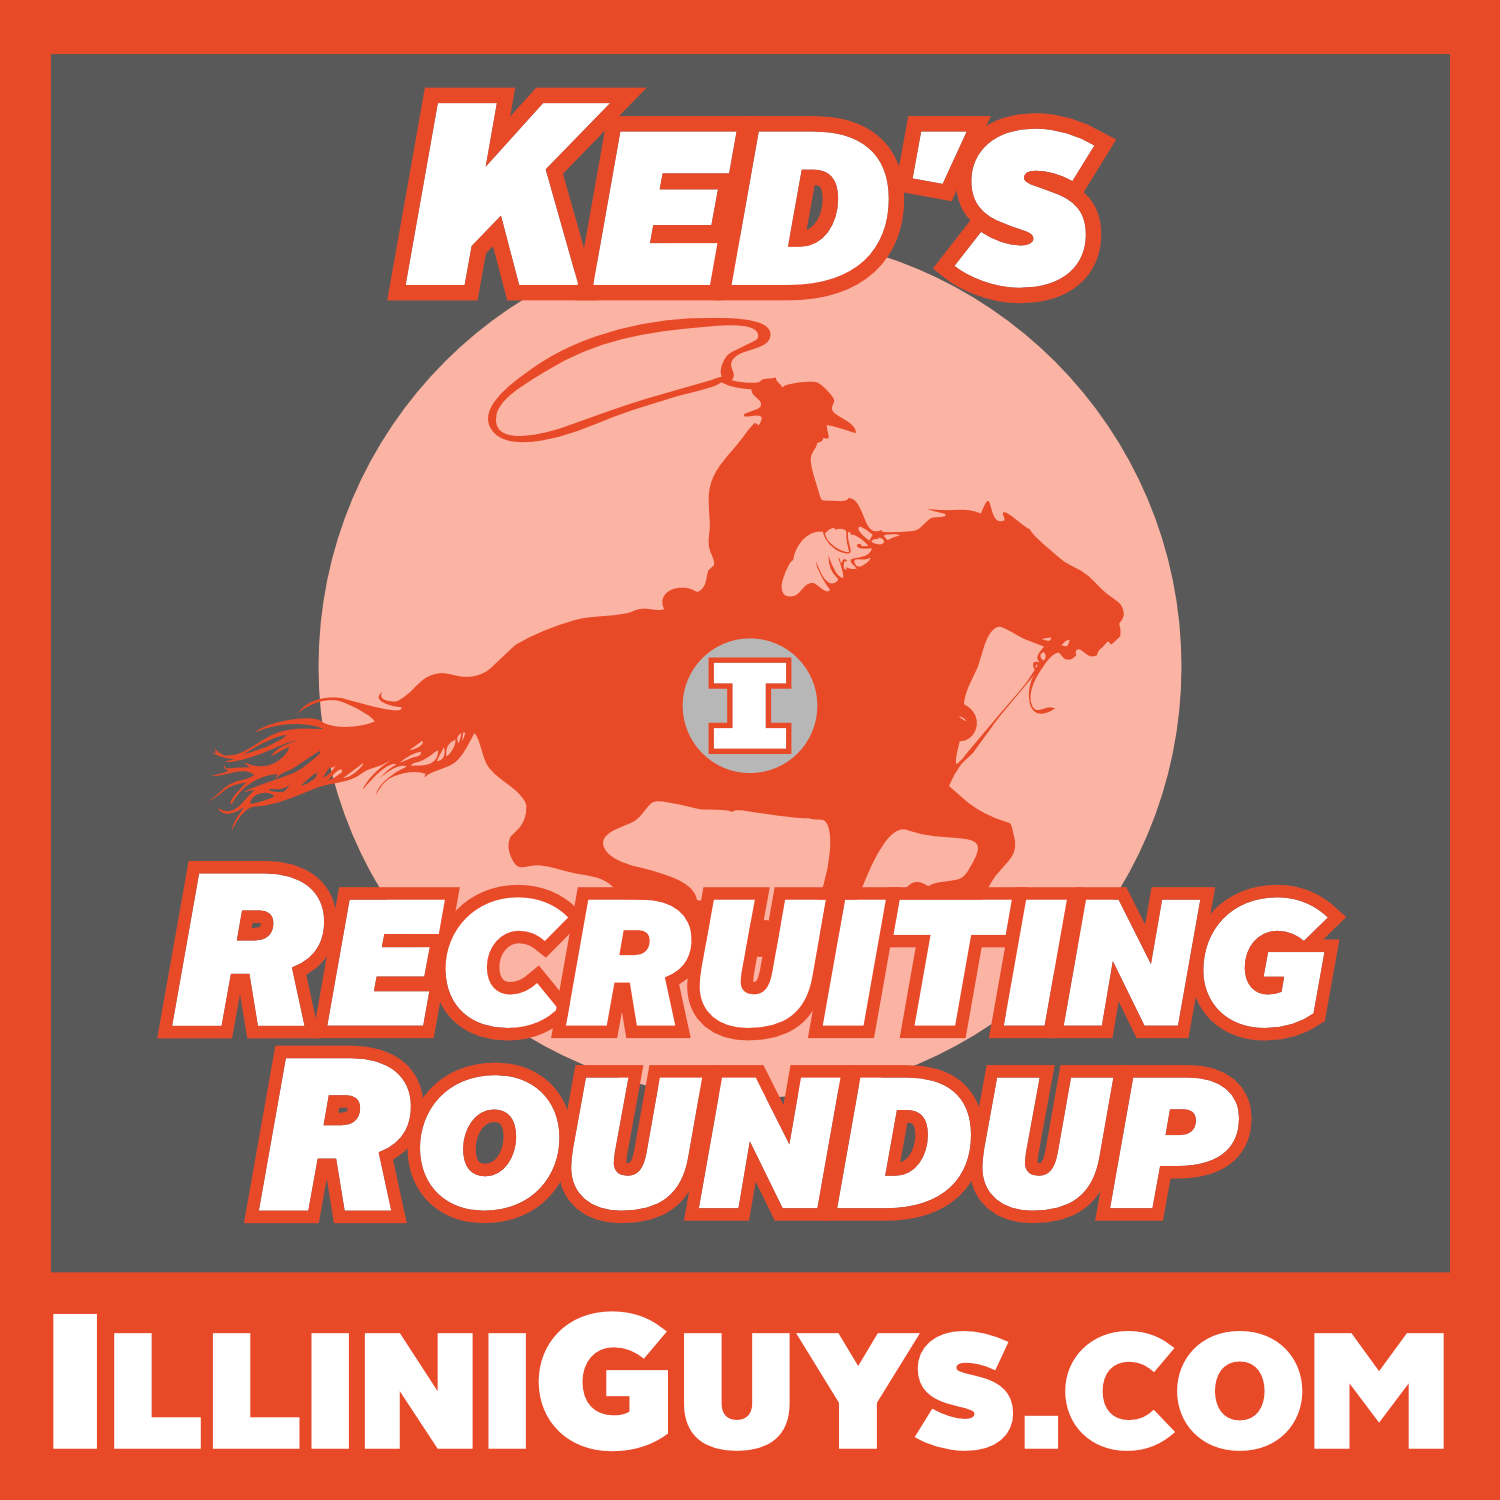 Ked's Recruiting Roundup - Anthony Kyle